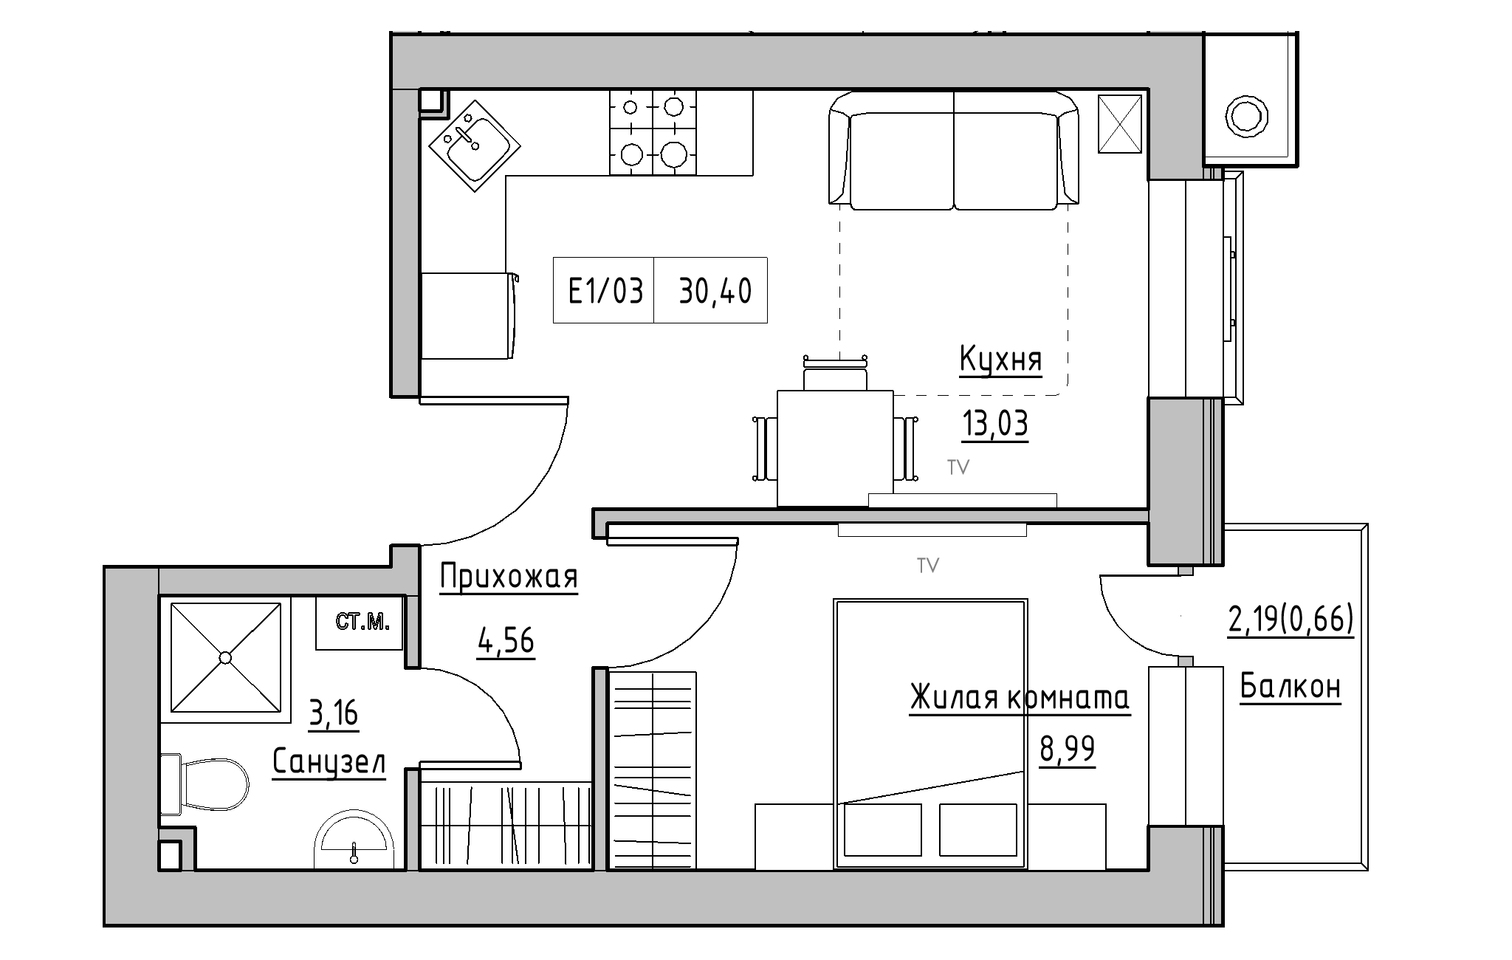 Planning 1-rm flats area 30.4m2, KS-013-05/0002.